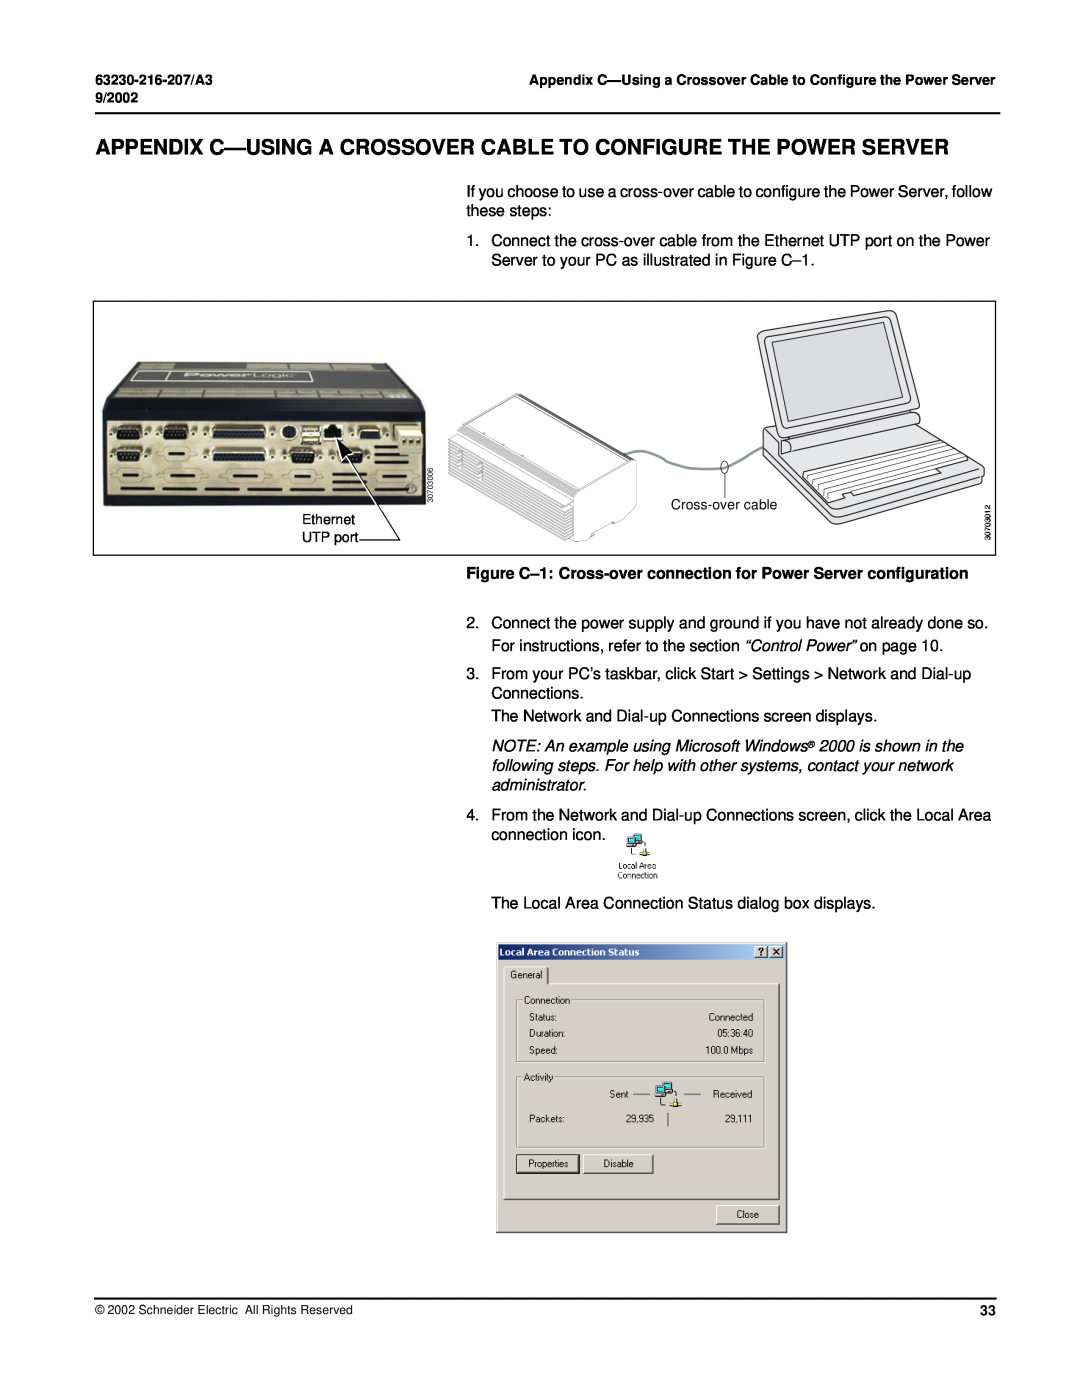 Schneider Electric PWRSRV750, PWRSRV710 setup guide Appendix C-Using A Crossover Cable To Configure The Power Server 